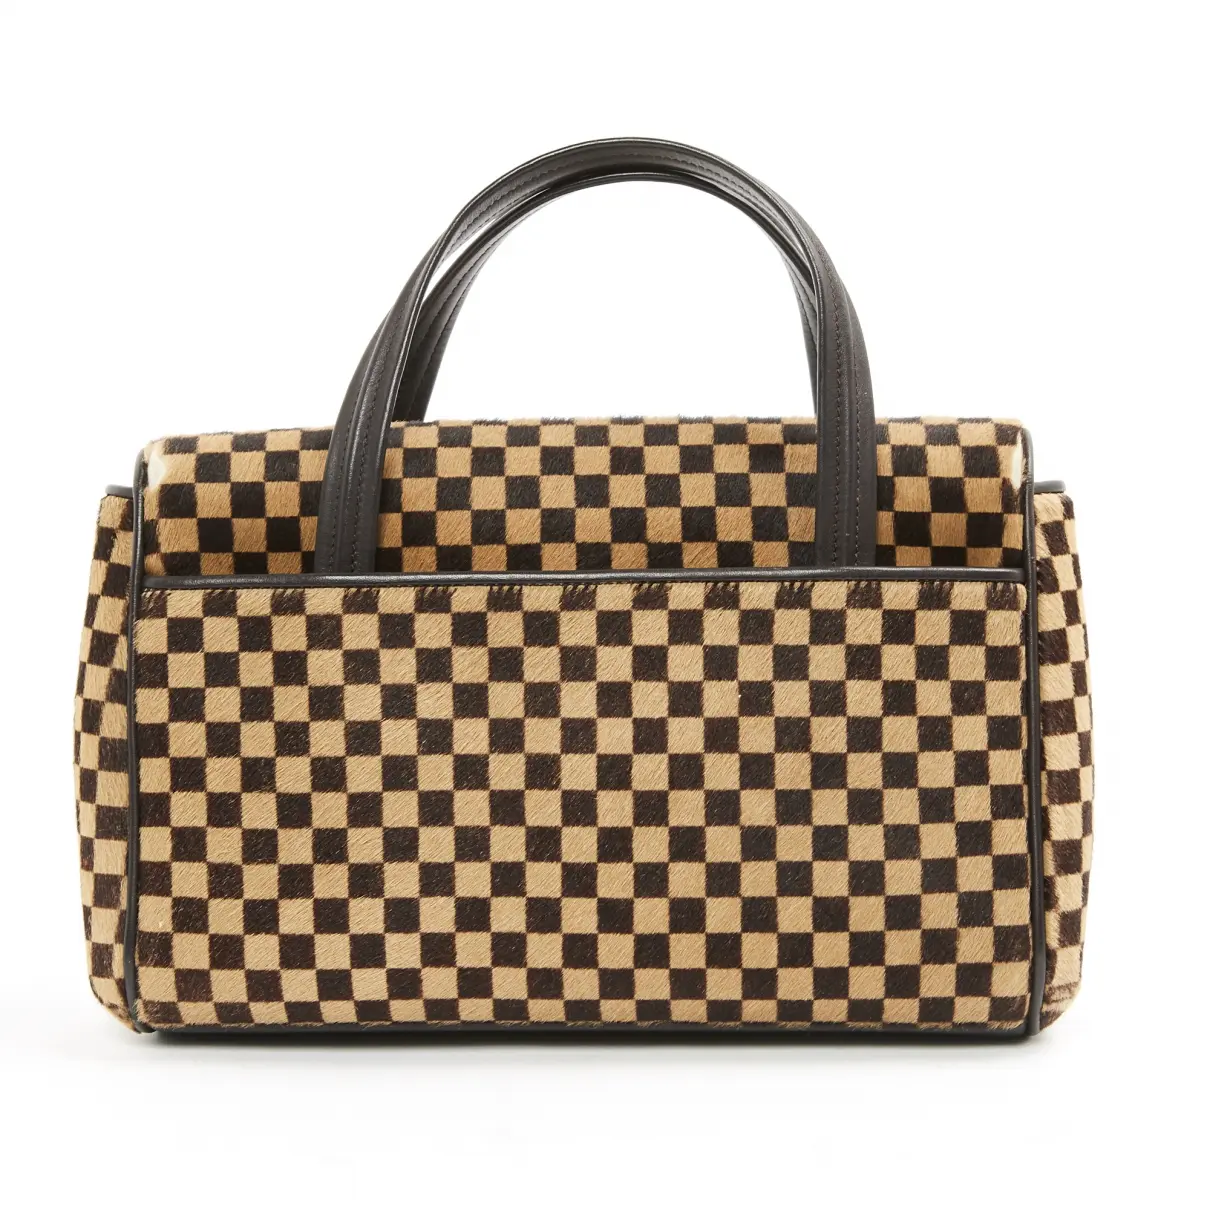 Buy Louis Vuitton Pony-style calfskin handbag online